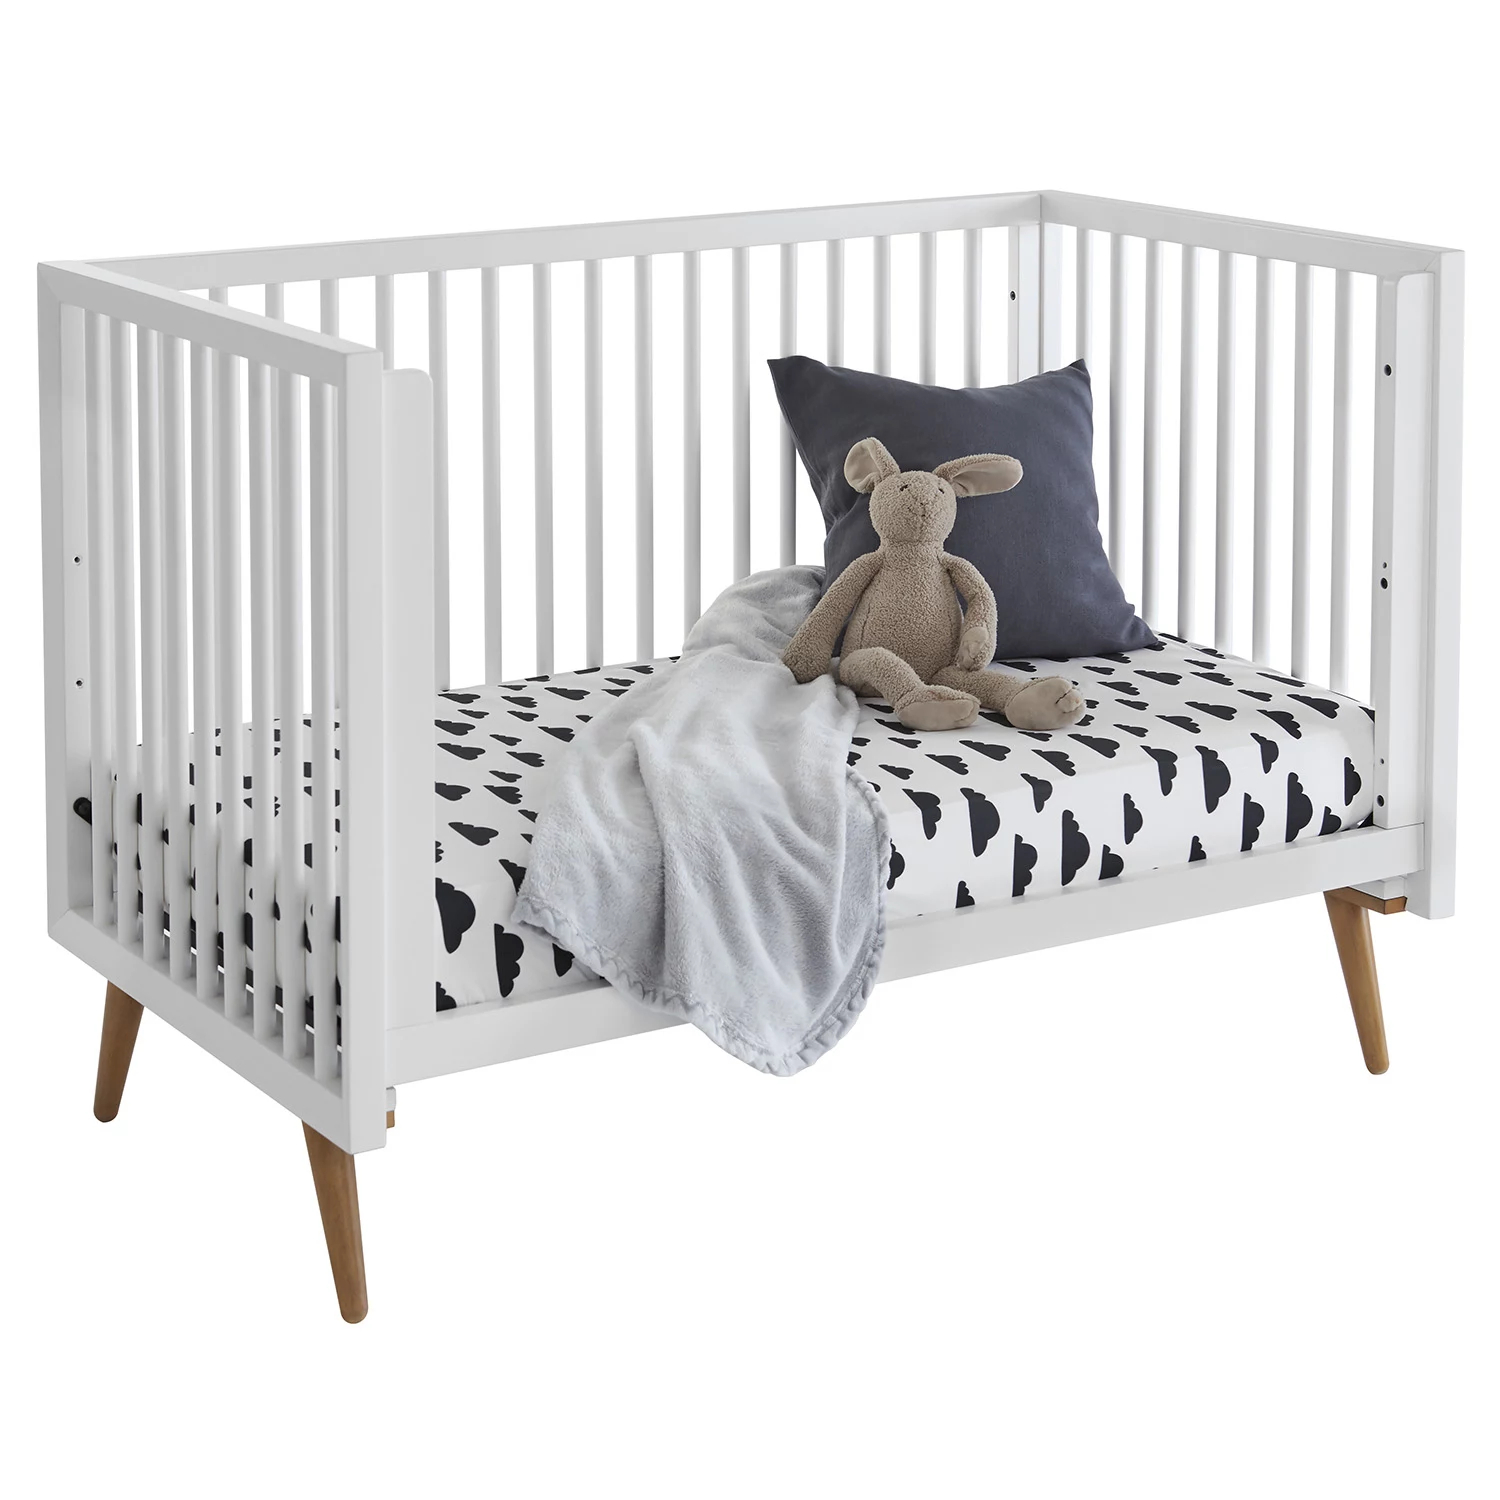 Factory made newborn crib bed luxury wooden modern baby cribs (4).jpg